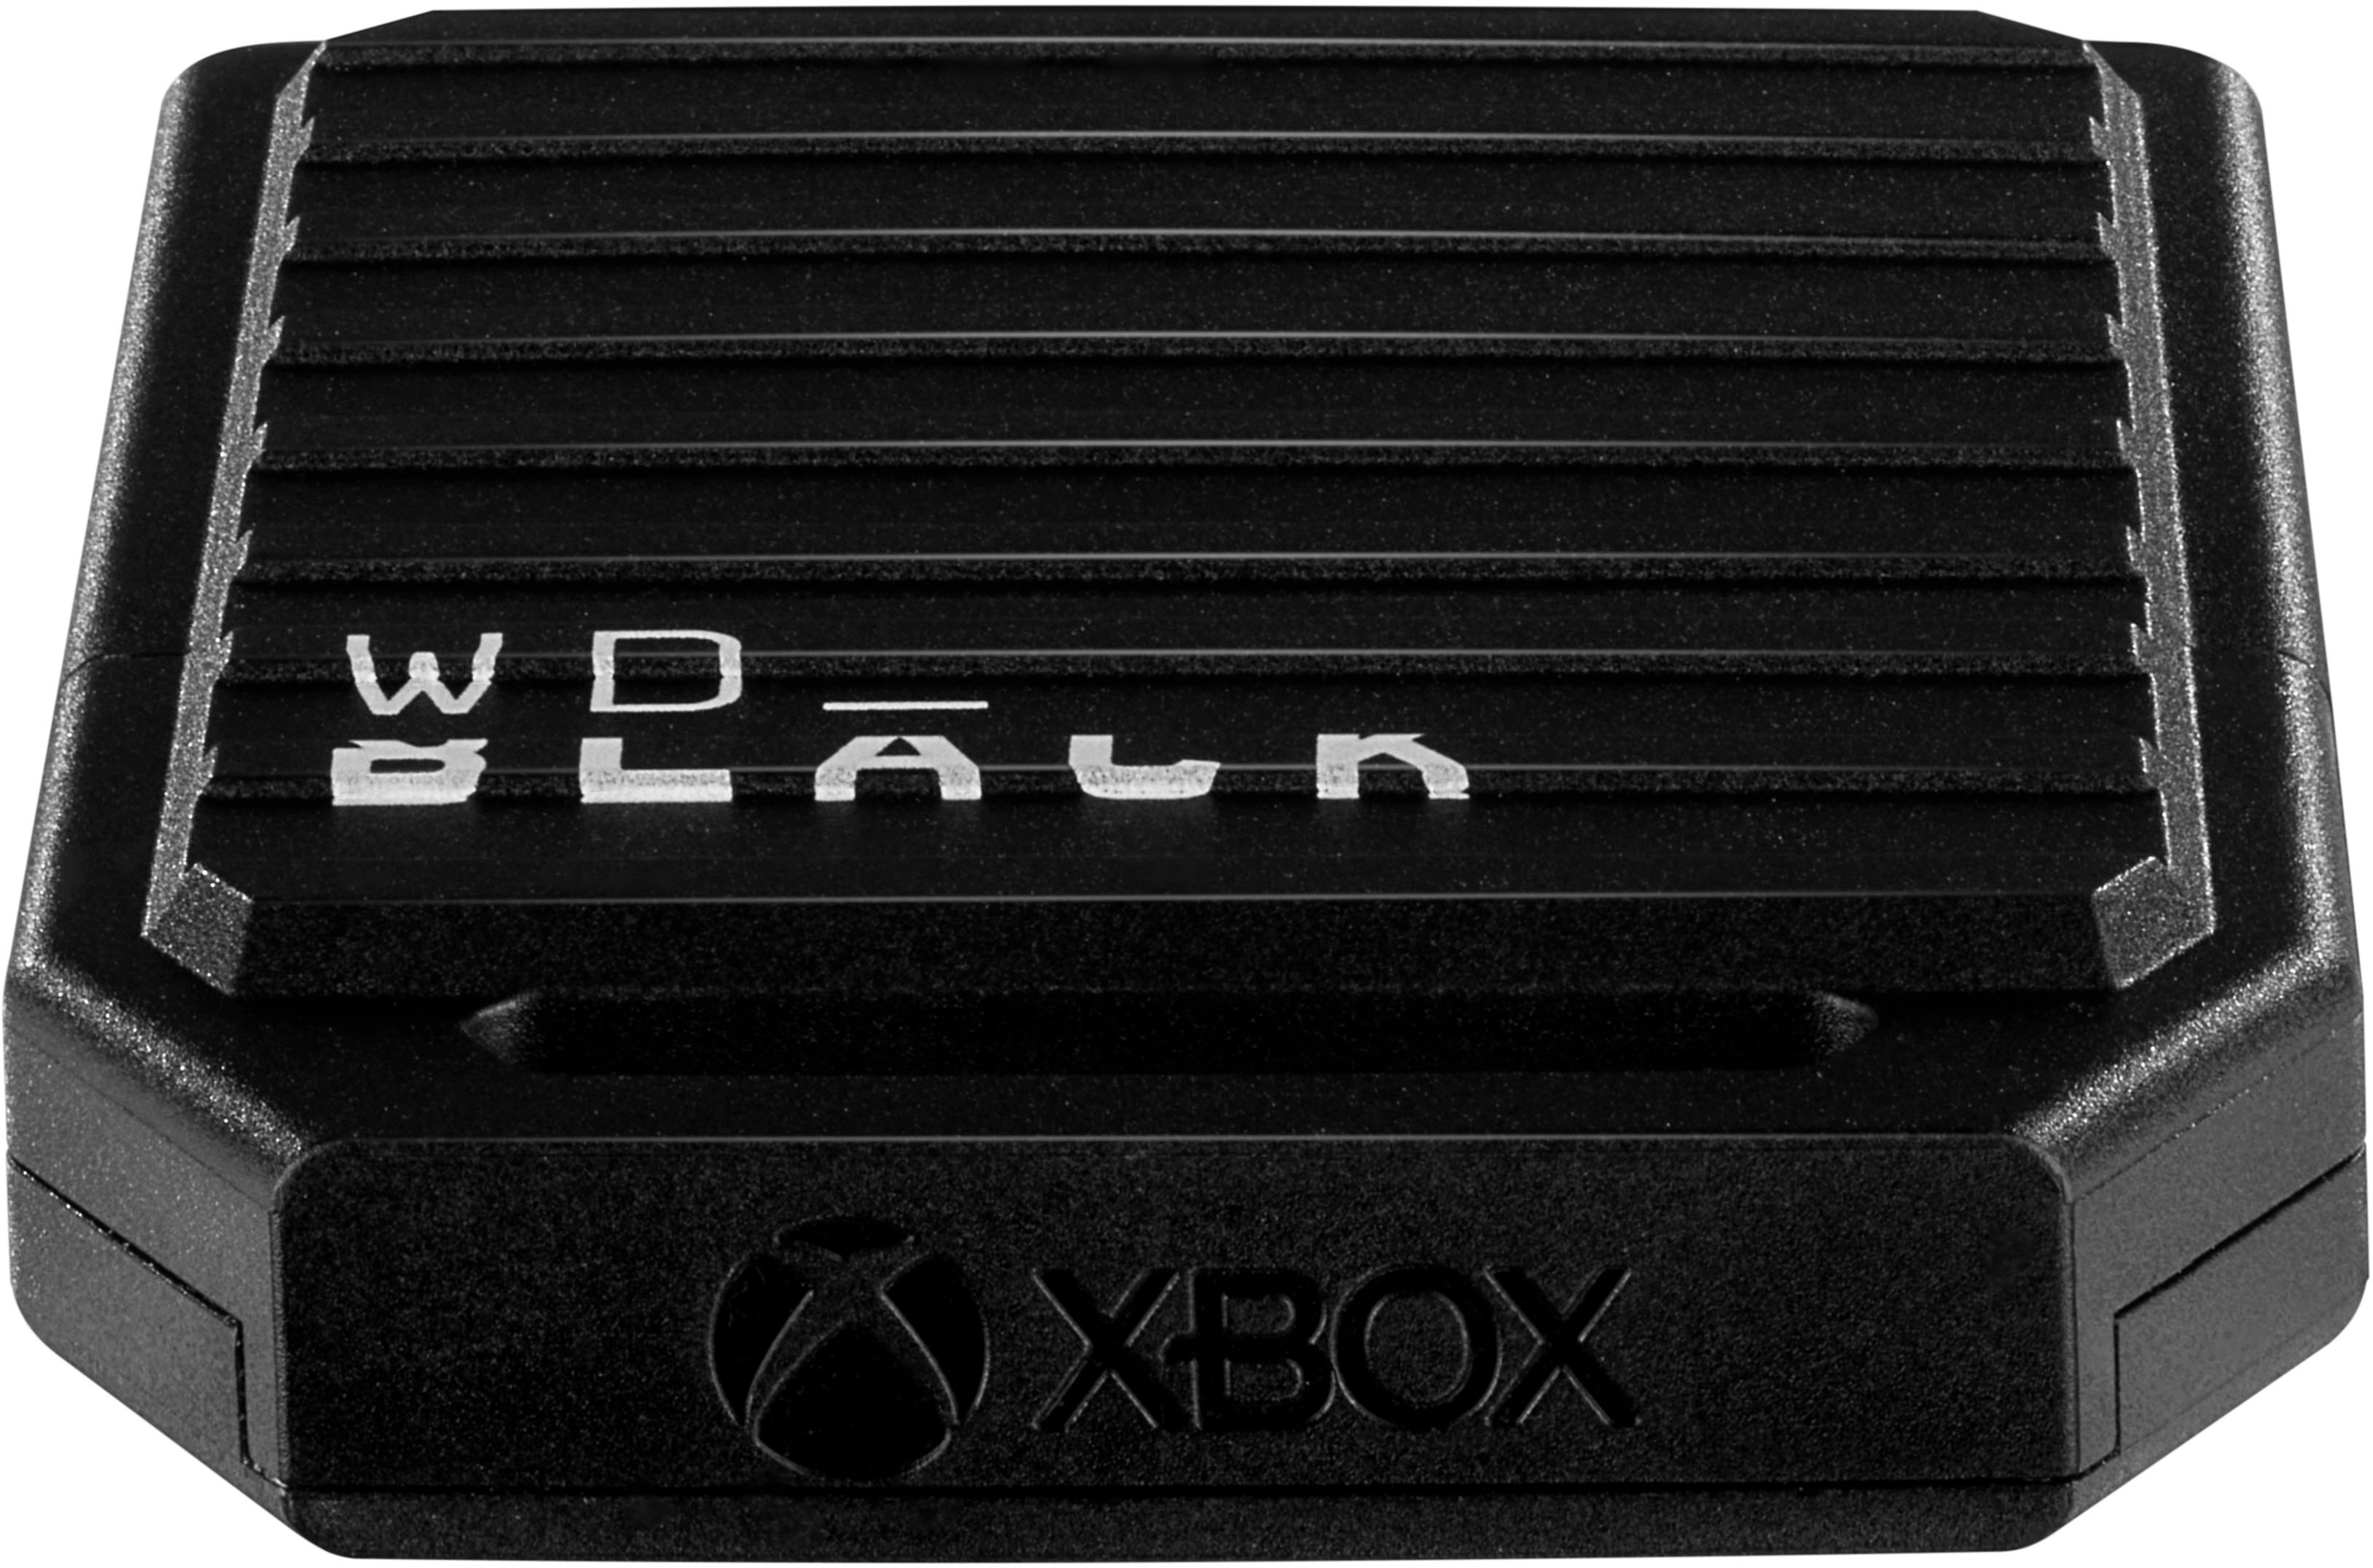 Save $25 Off the WD Black C50 1TB Xbox Series X